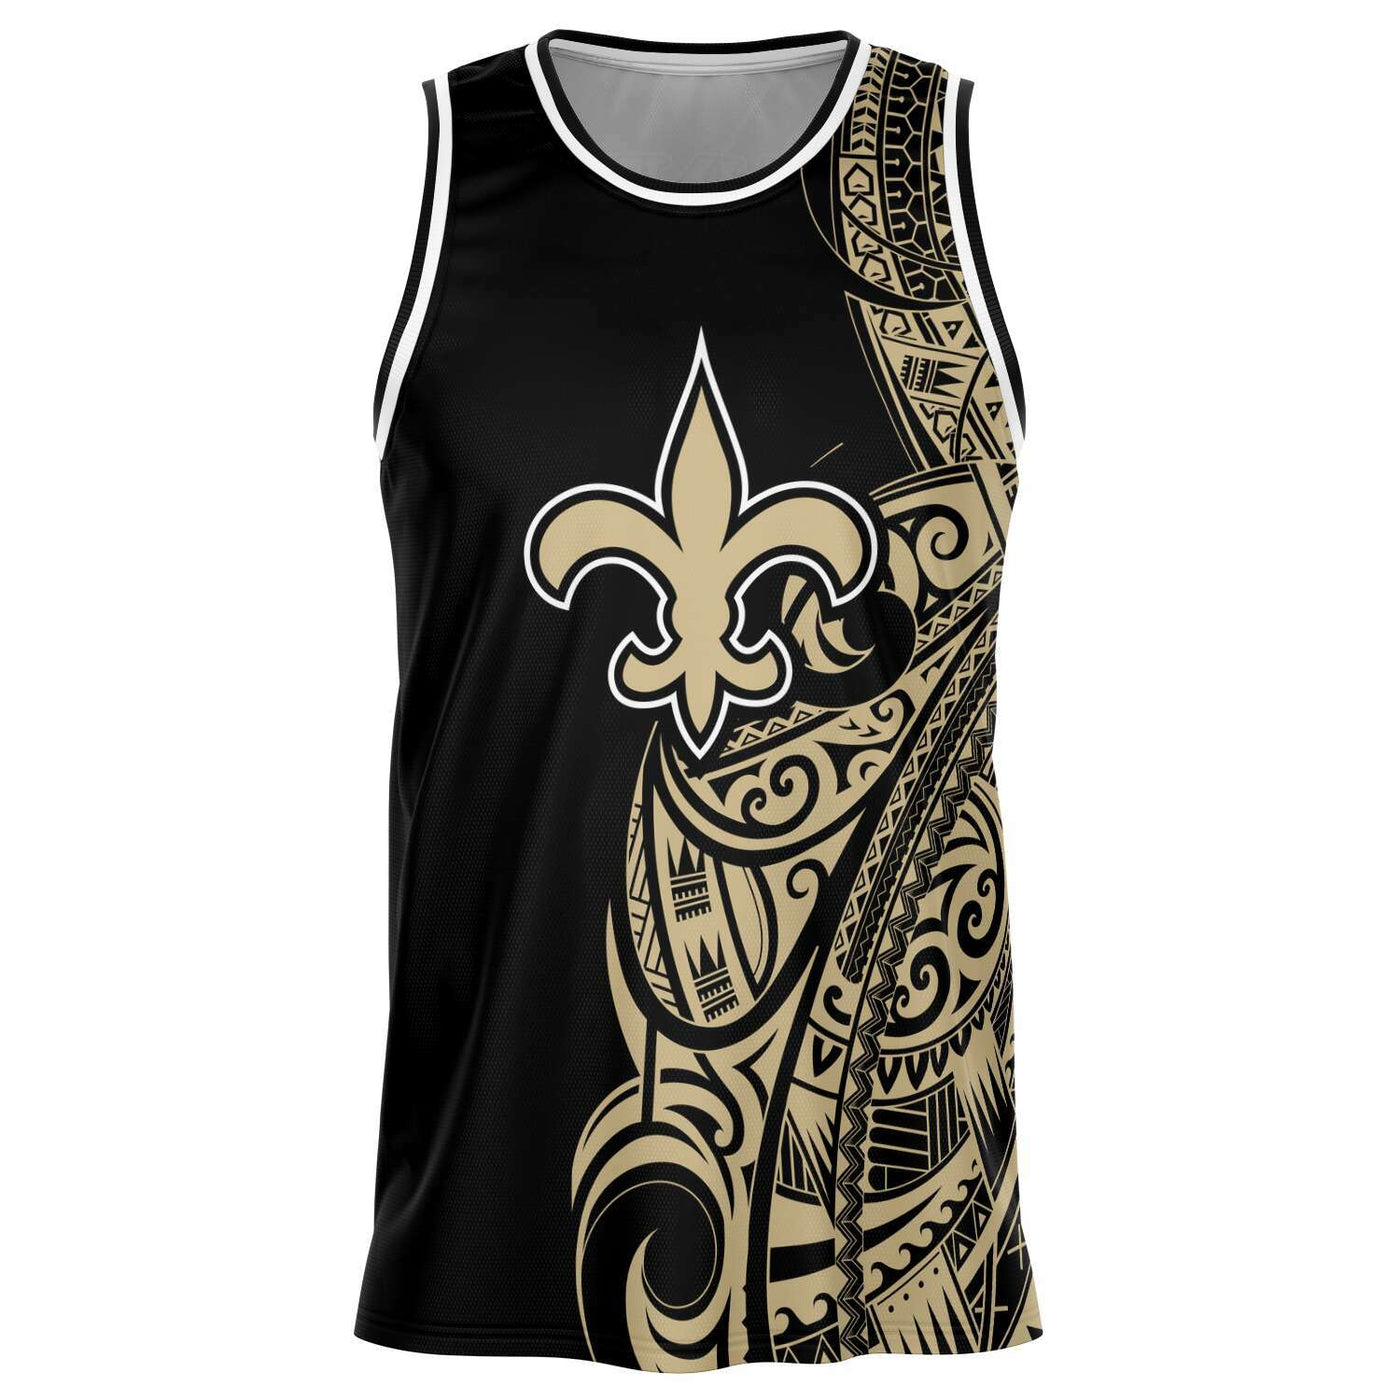 new orleans saints jersey shirt